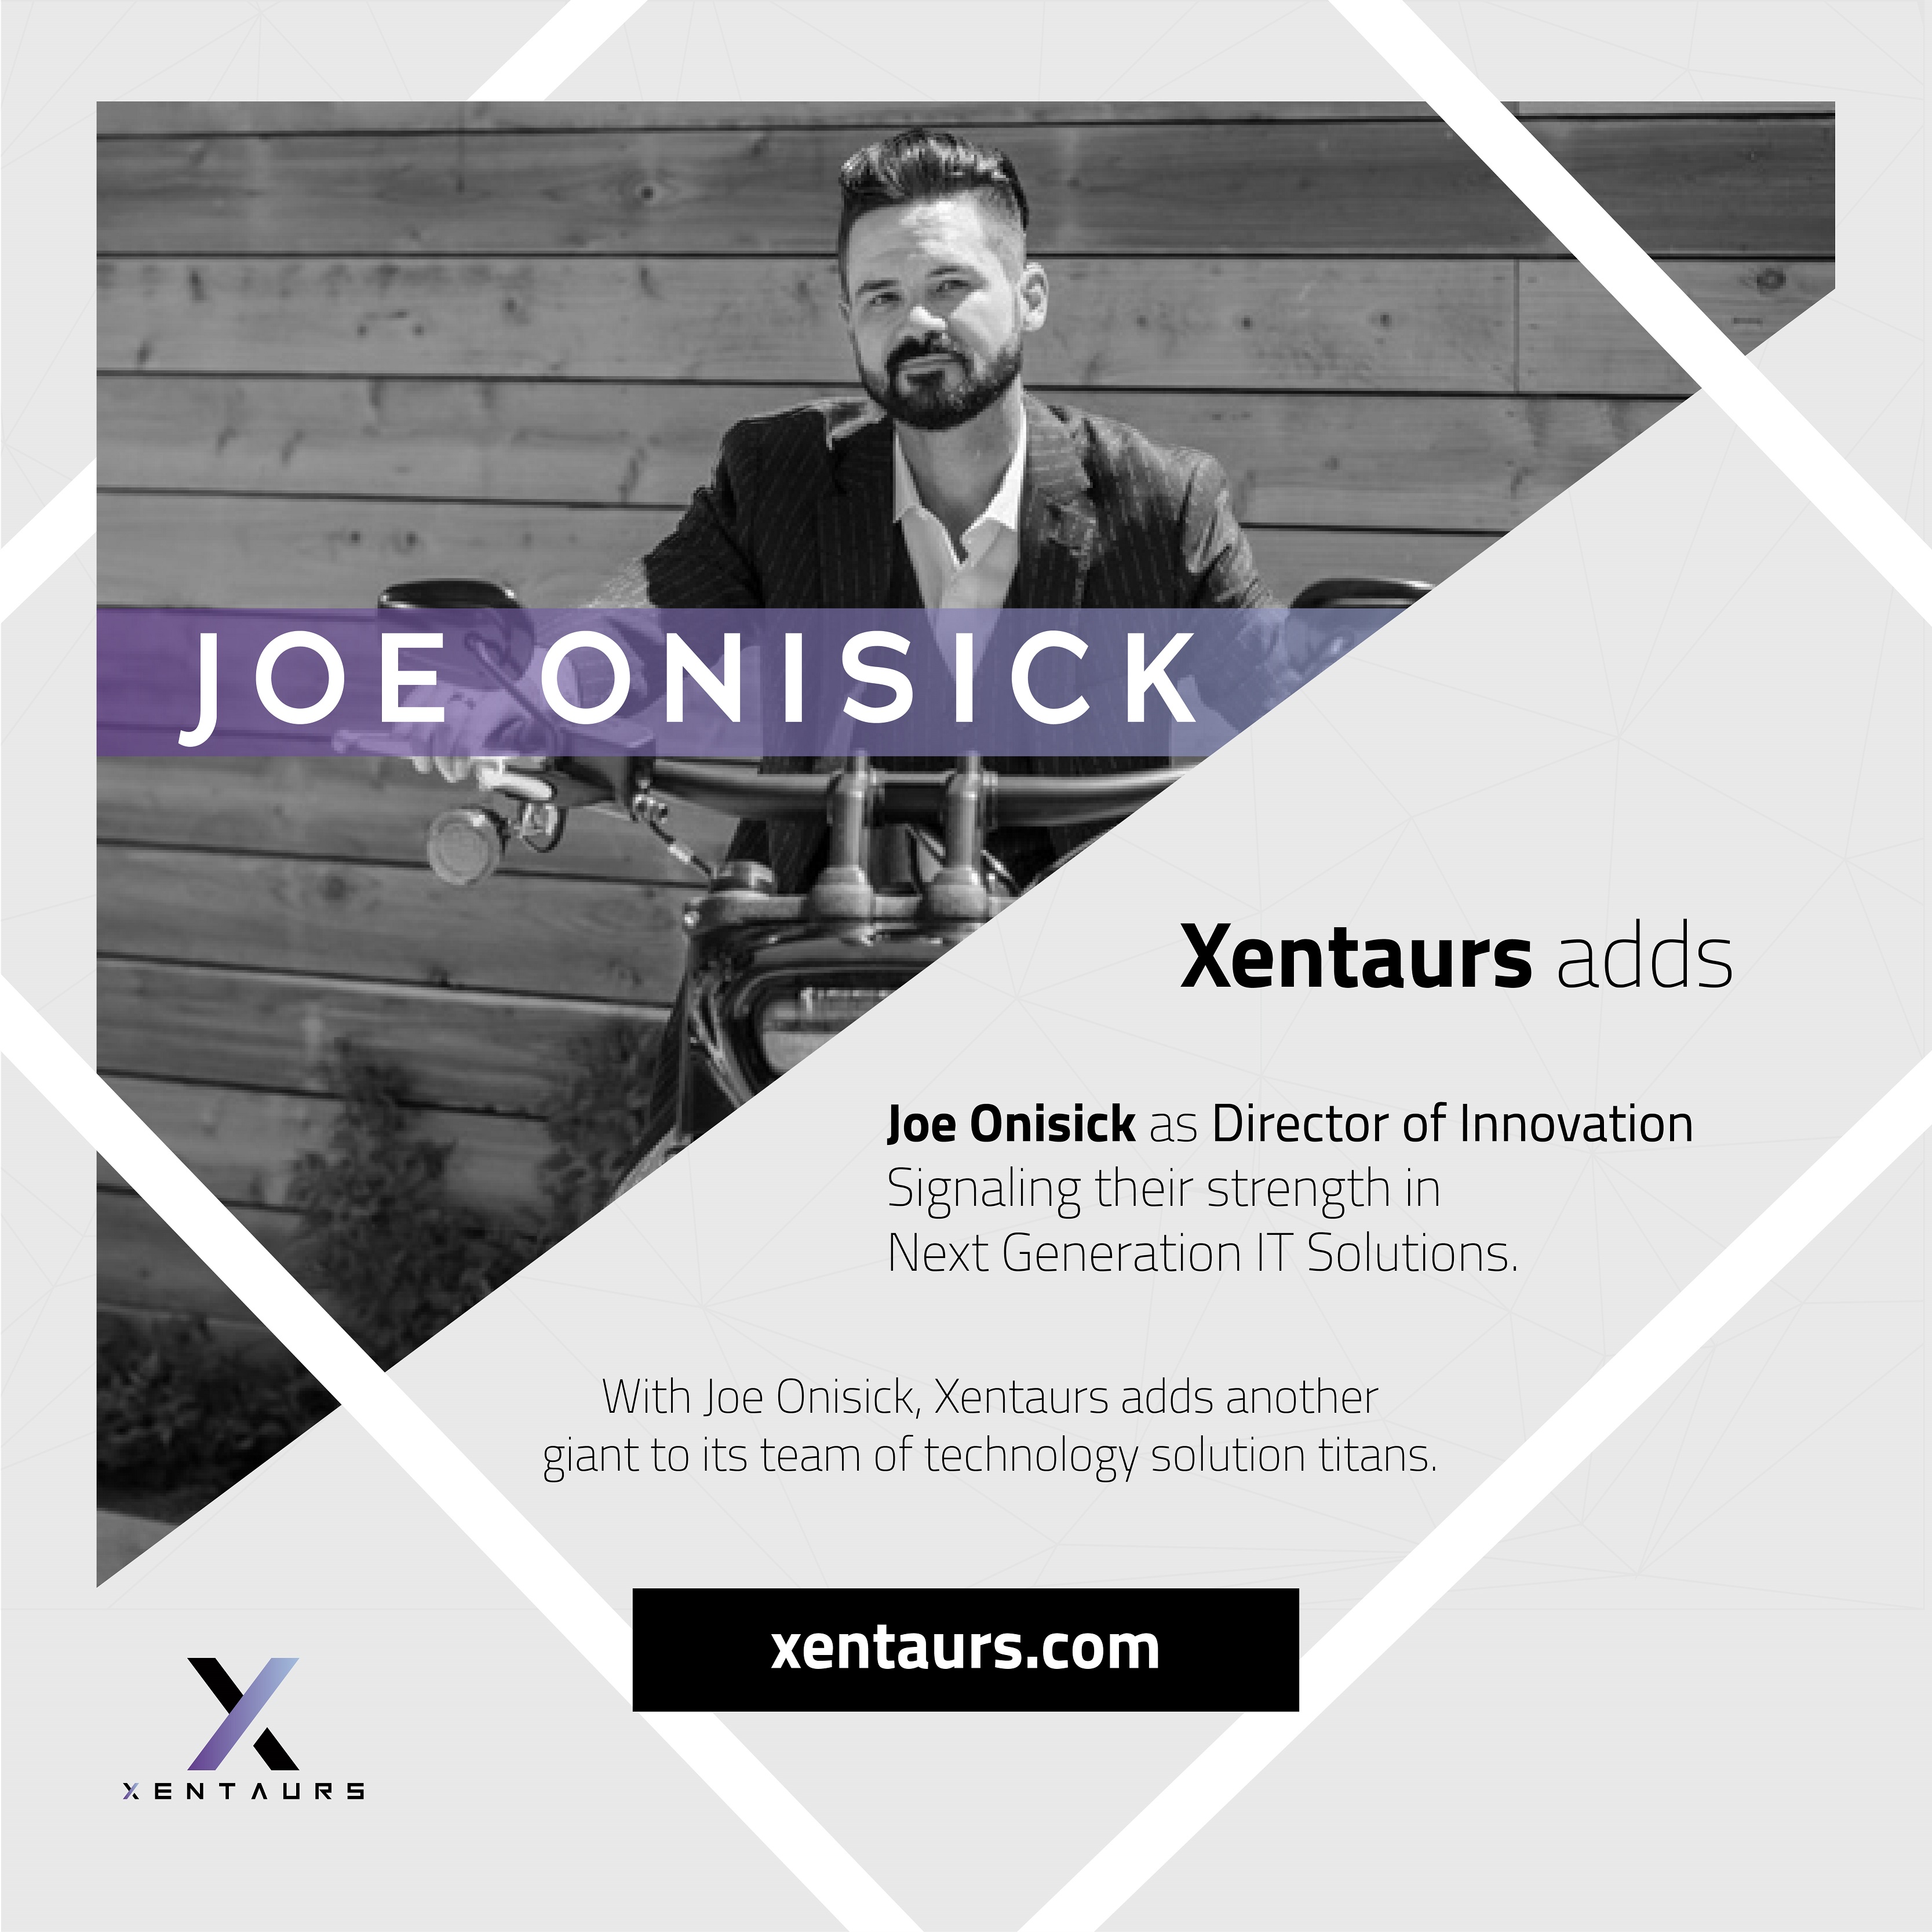 Joe Onisick - Director of Innovation